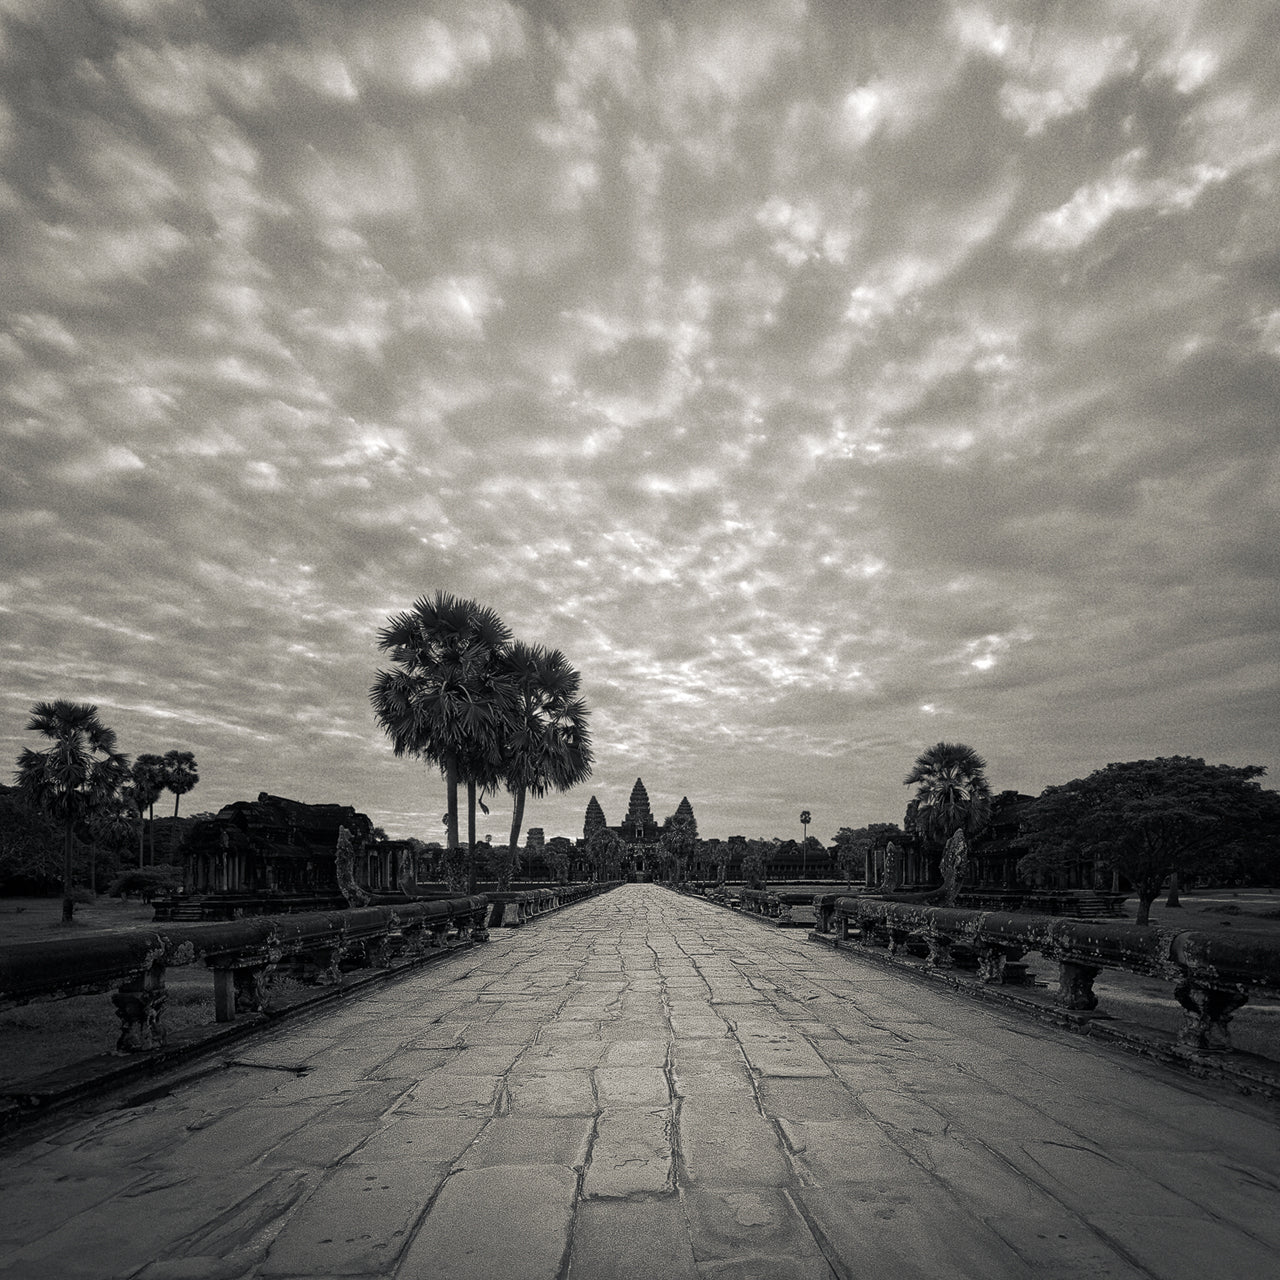 Causeway, Angkor Wat Temple, Cambodia. 2020